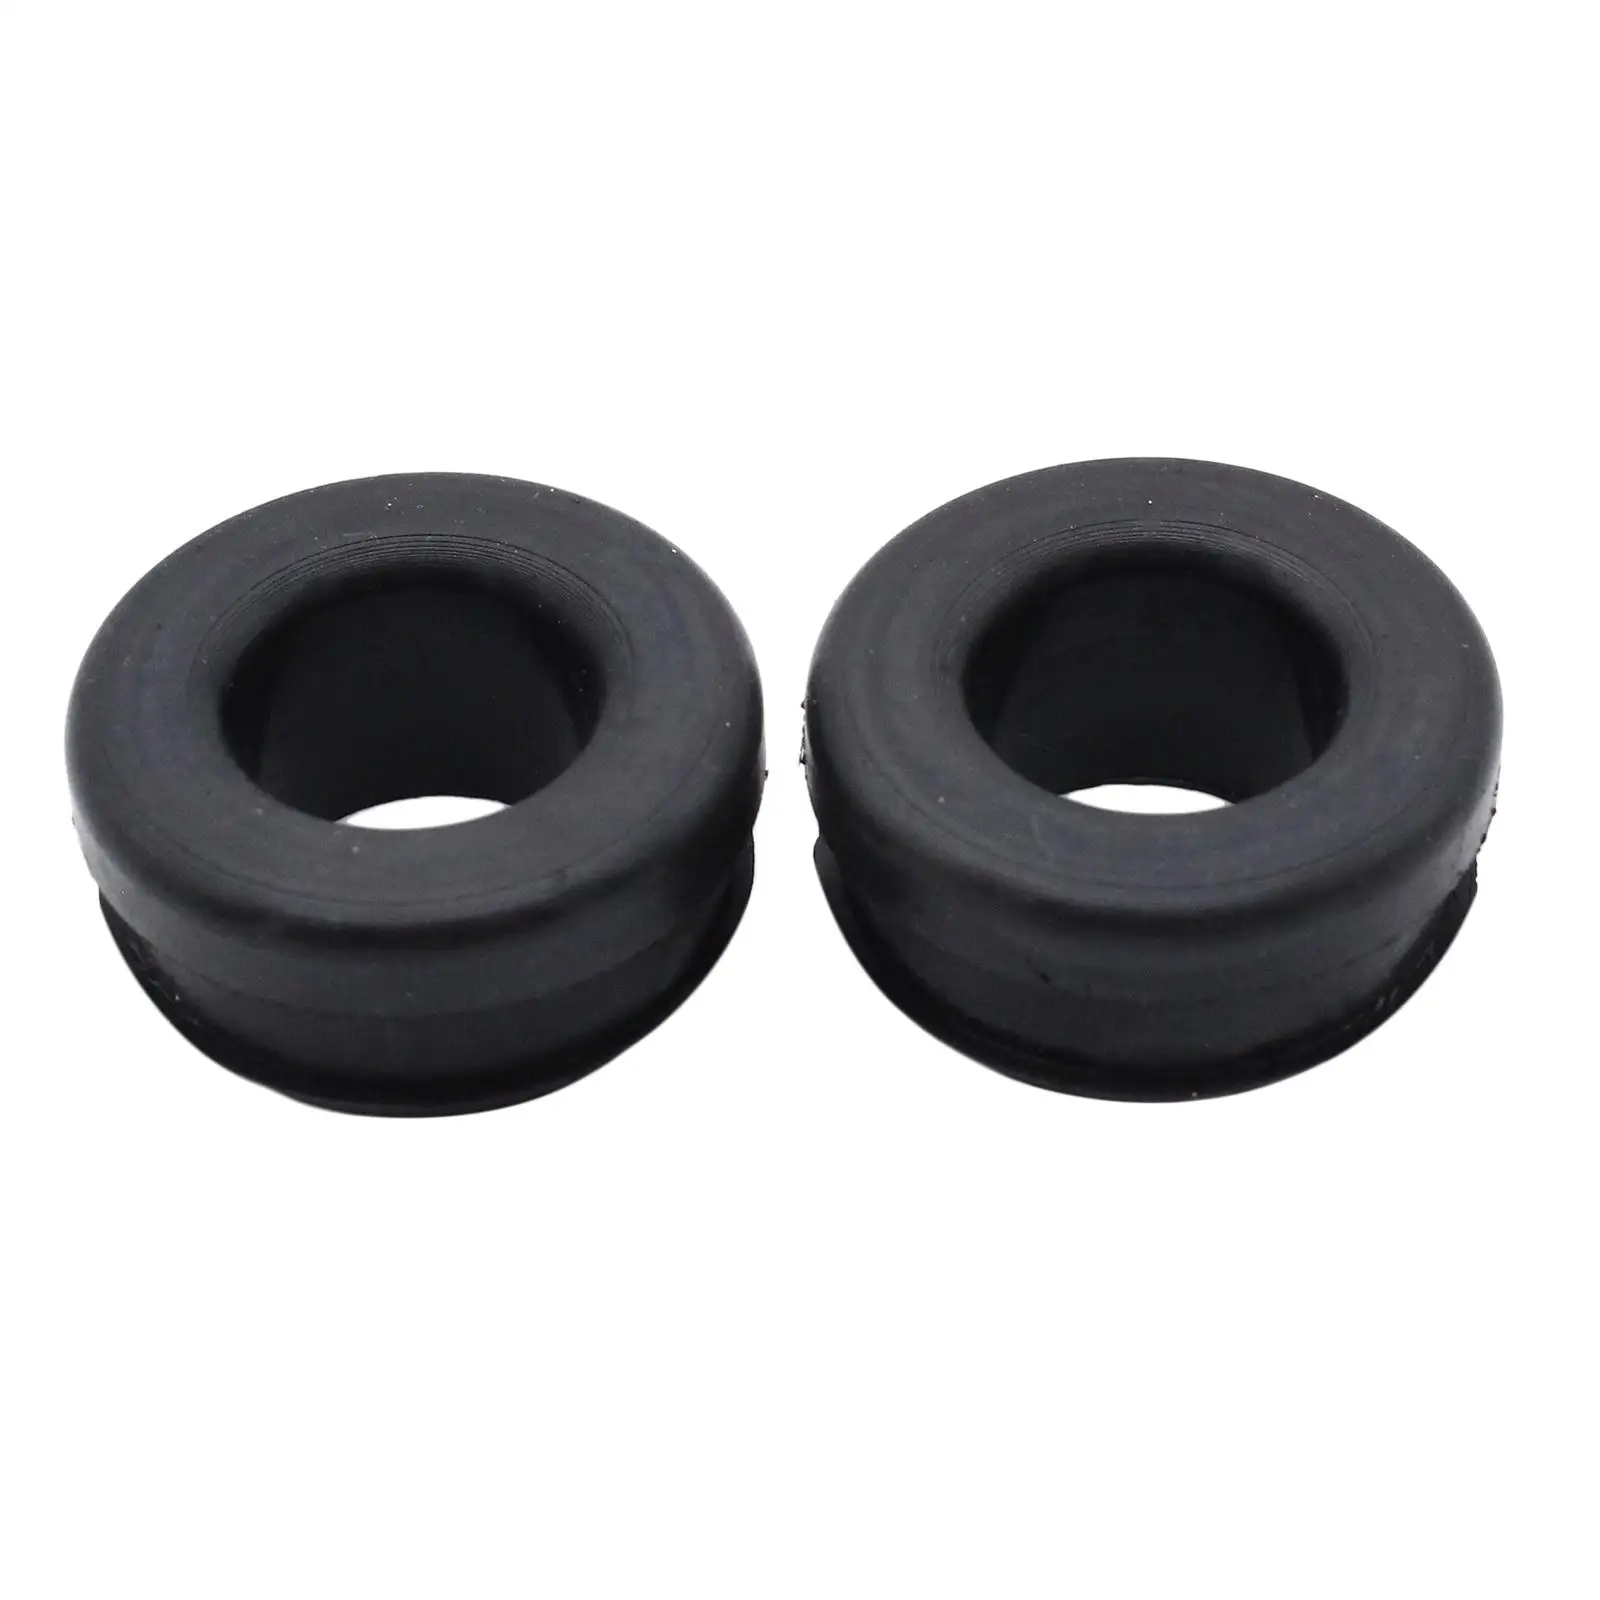 2 Pieces Rubber Pcv Breather Grommets Vehicle Parts Accessories Black 1